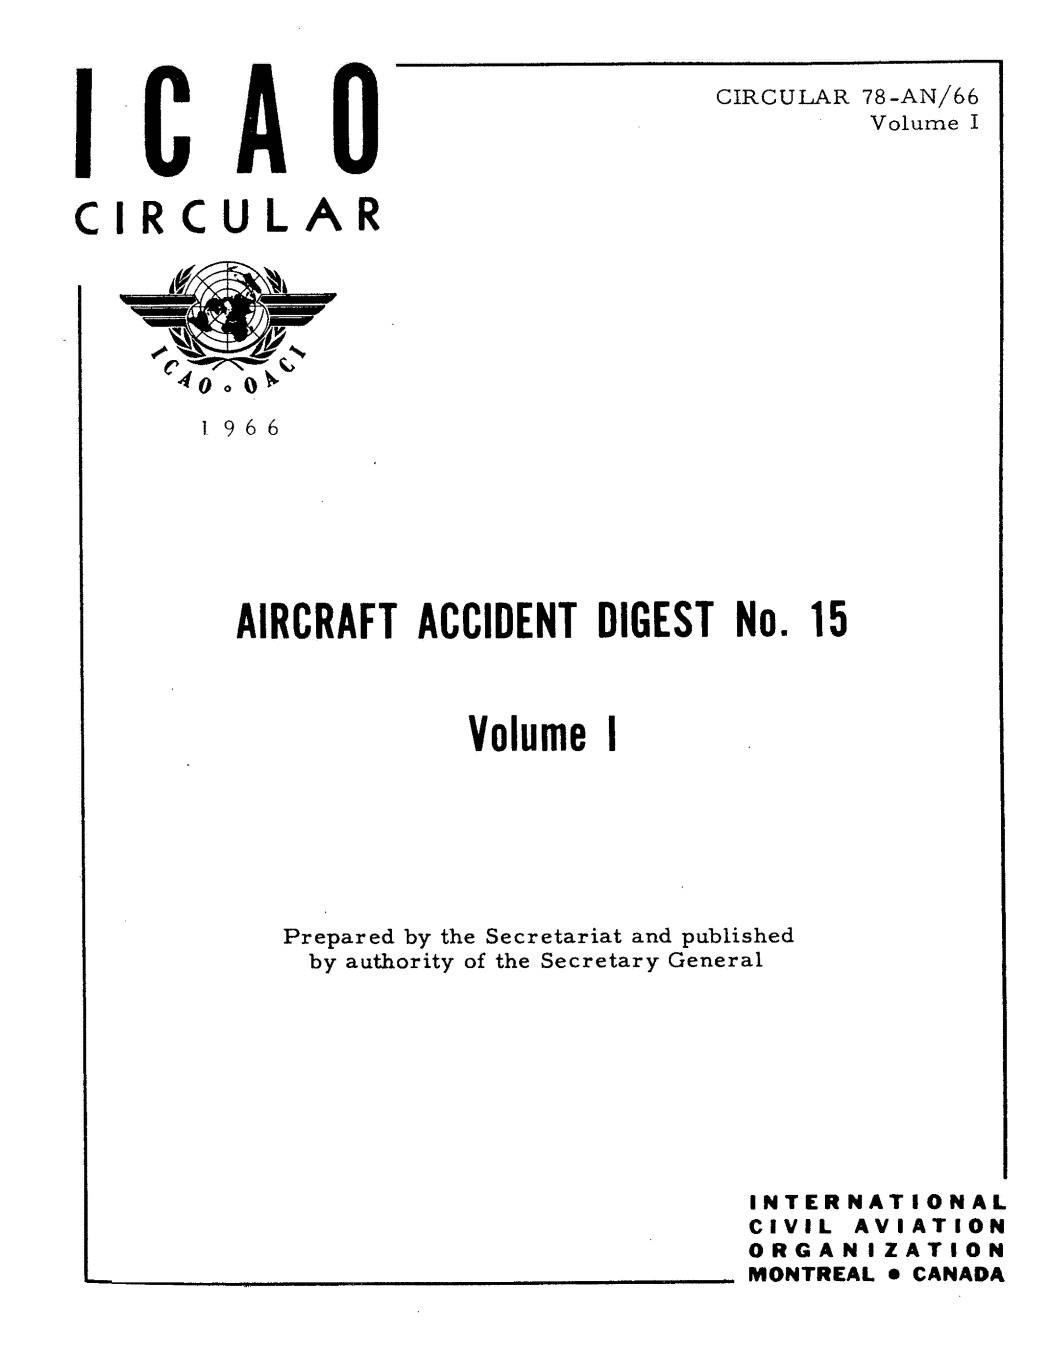 Cir 78 AIRCRAFT ACCIDENT DIGEST No. 15  Volume I